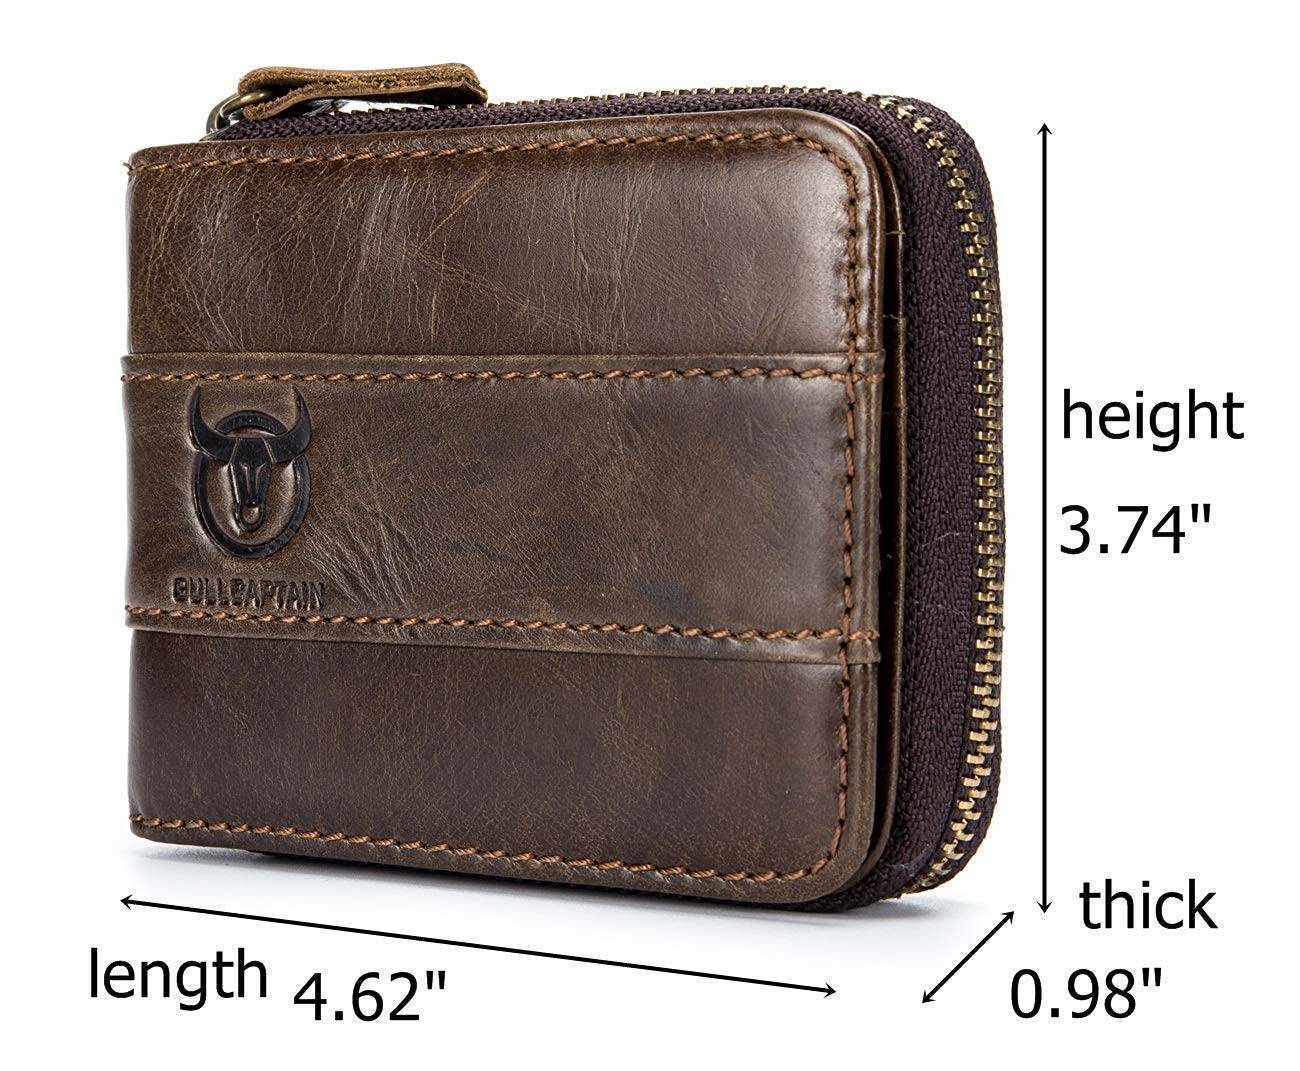 Bullcaptain zipper  wallet